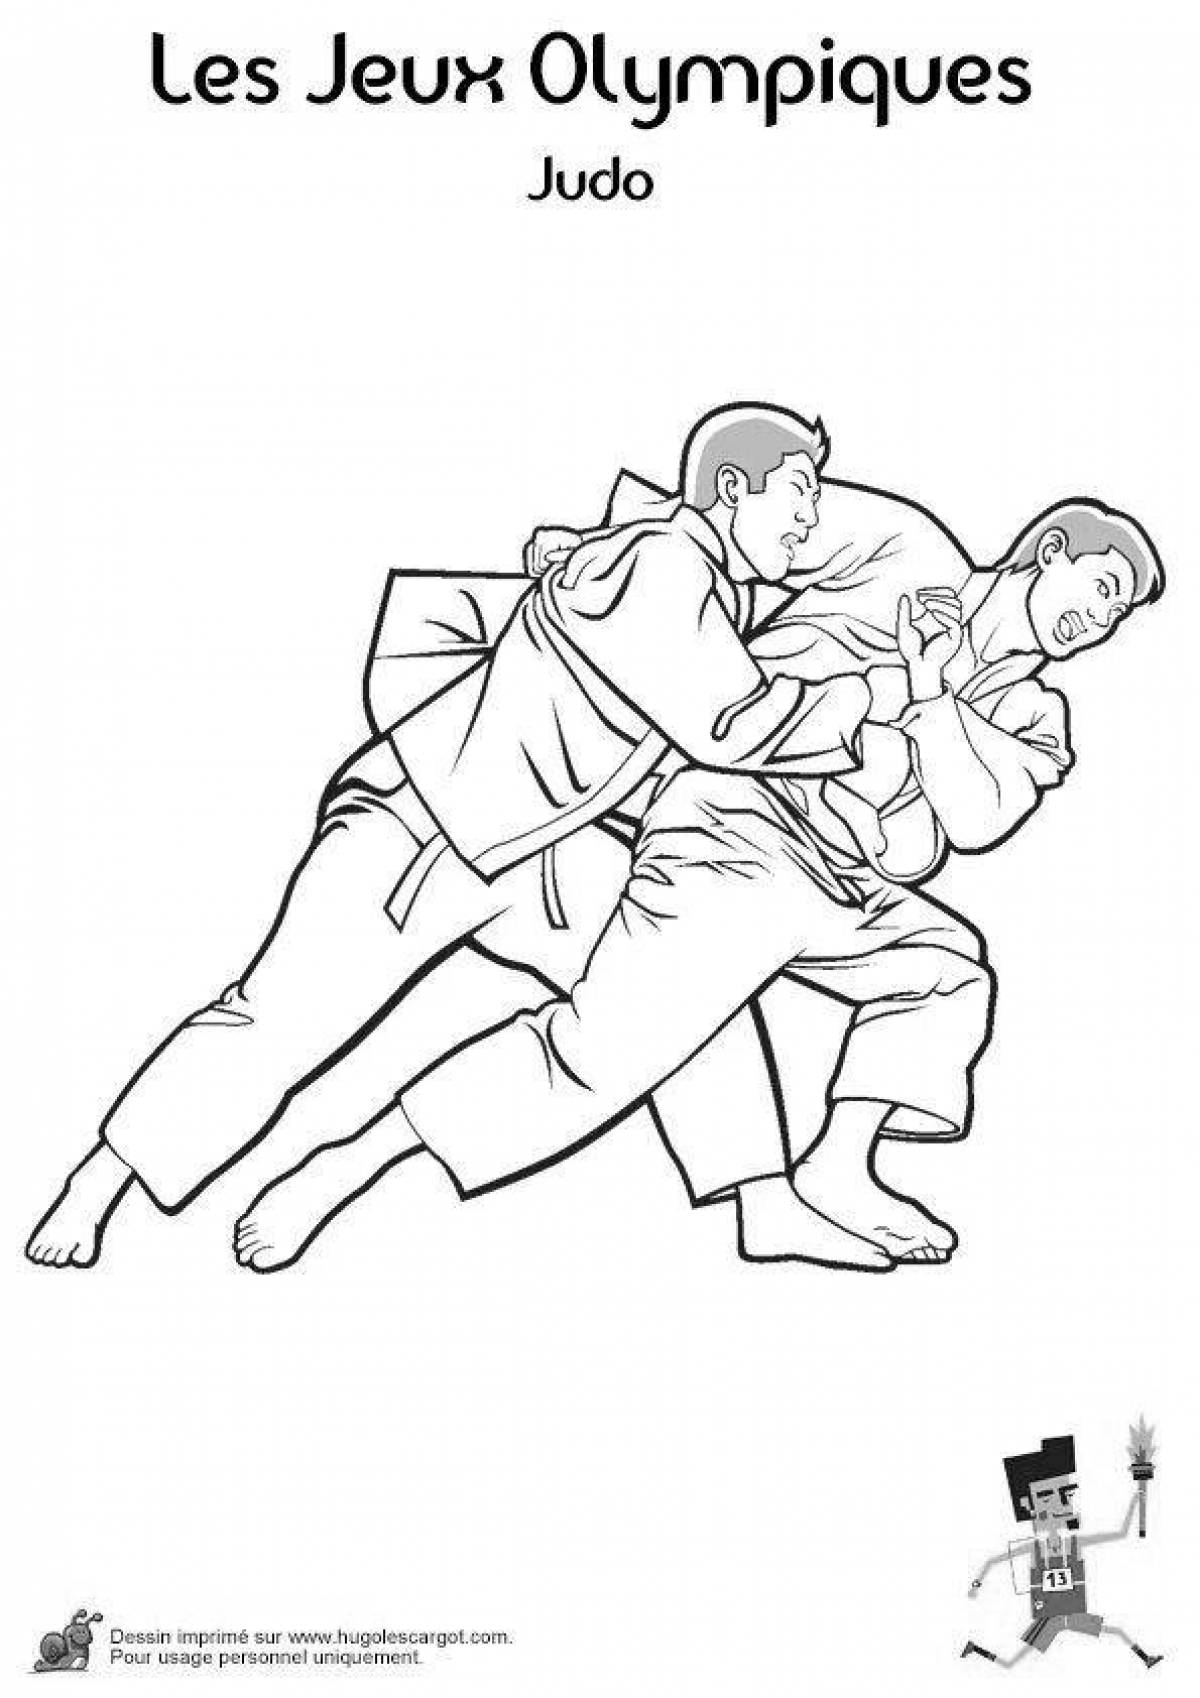 Funny jiu-jitsu coloring book